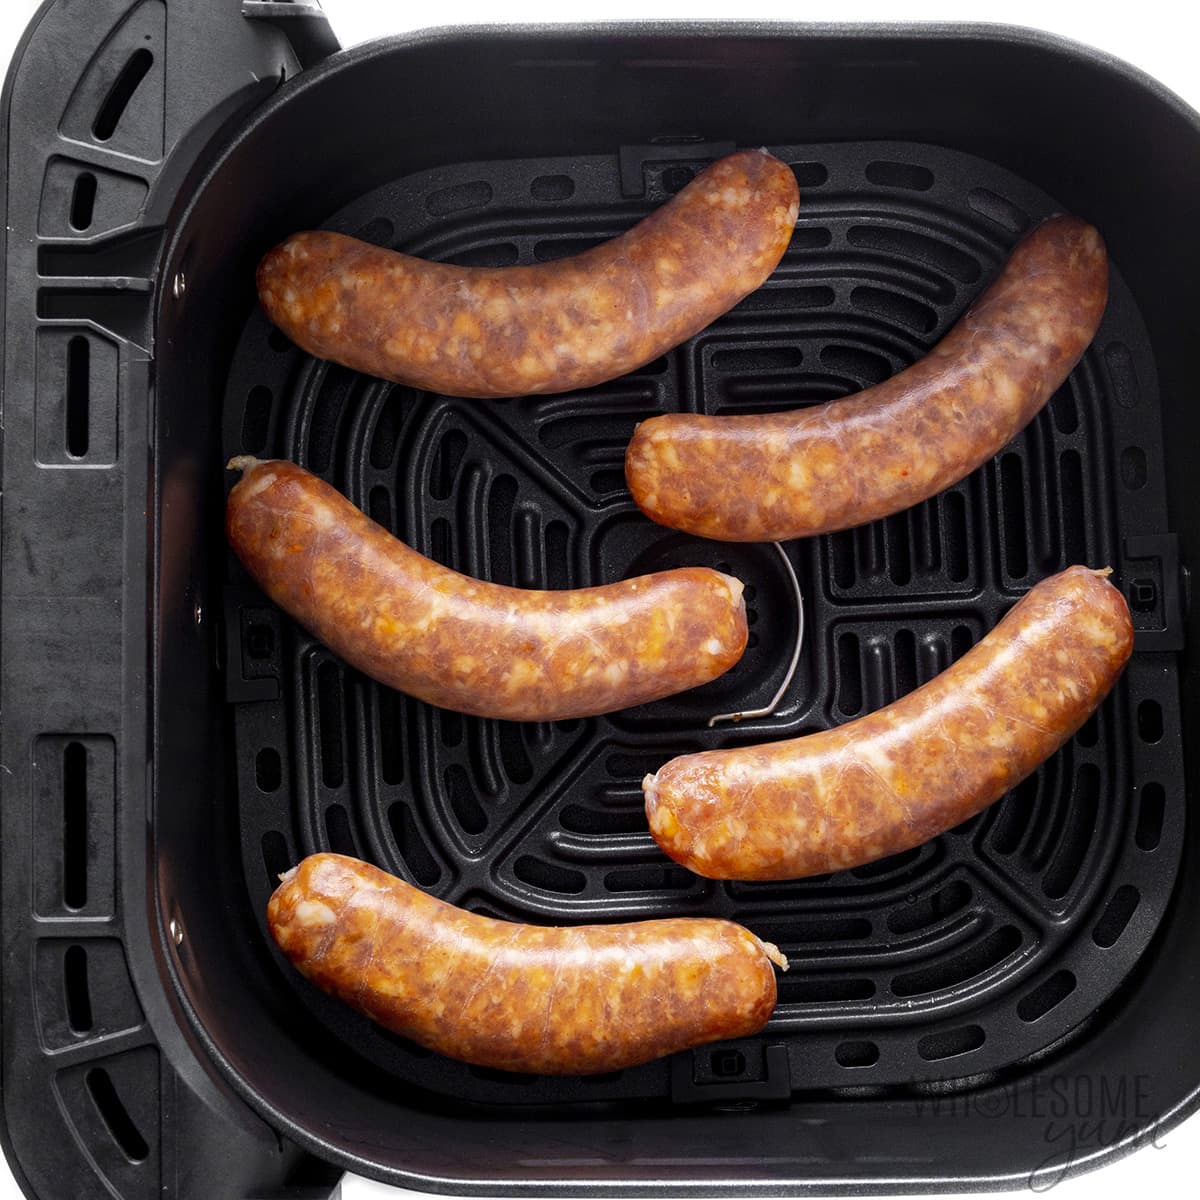 Raw sausage in air fryer basket.